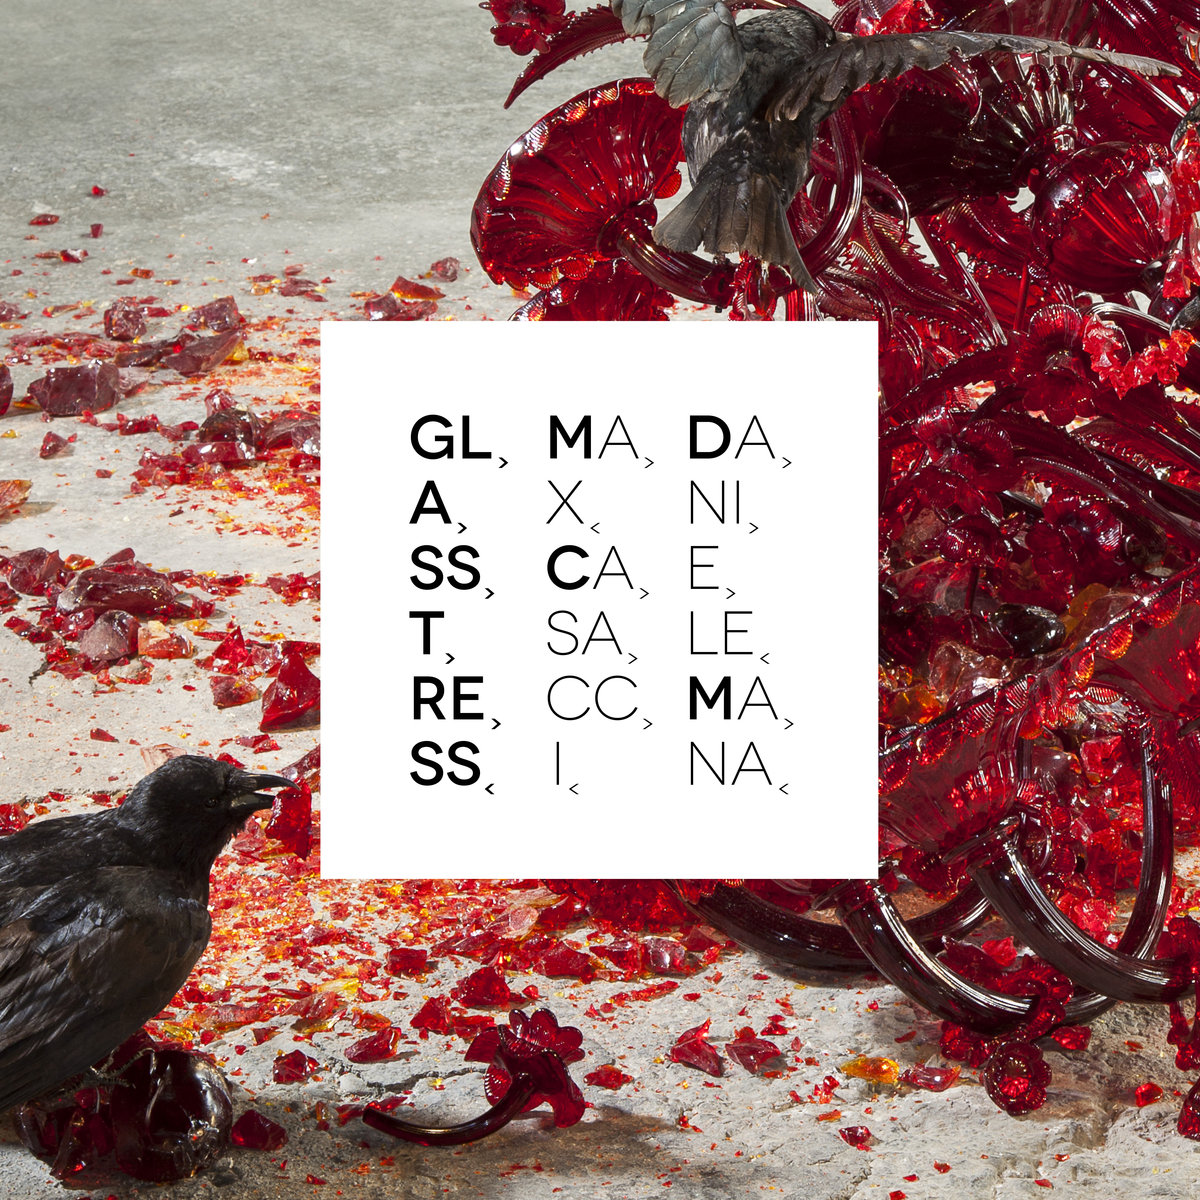 Max Casacci & Daniele Mana - Murano Notte @ 'Glasstress' album (alternative, electronic)